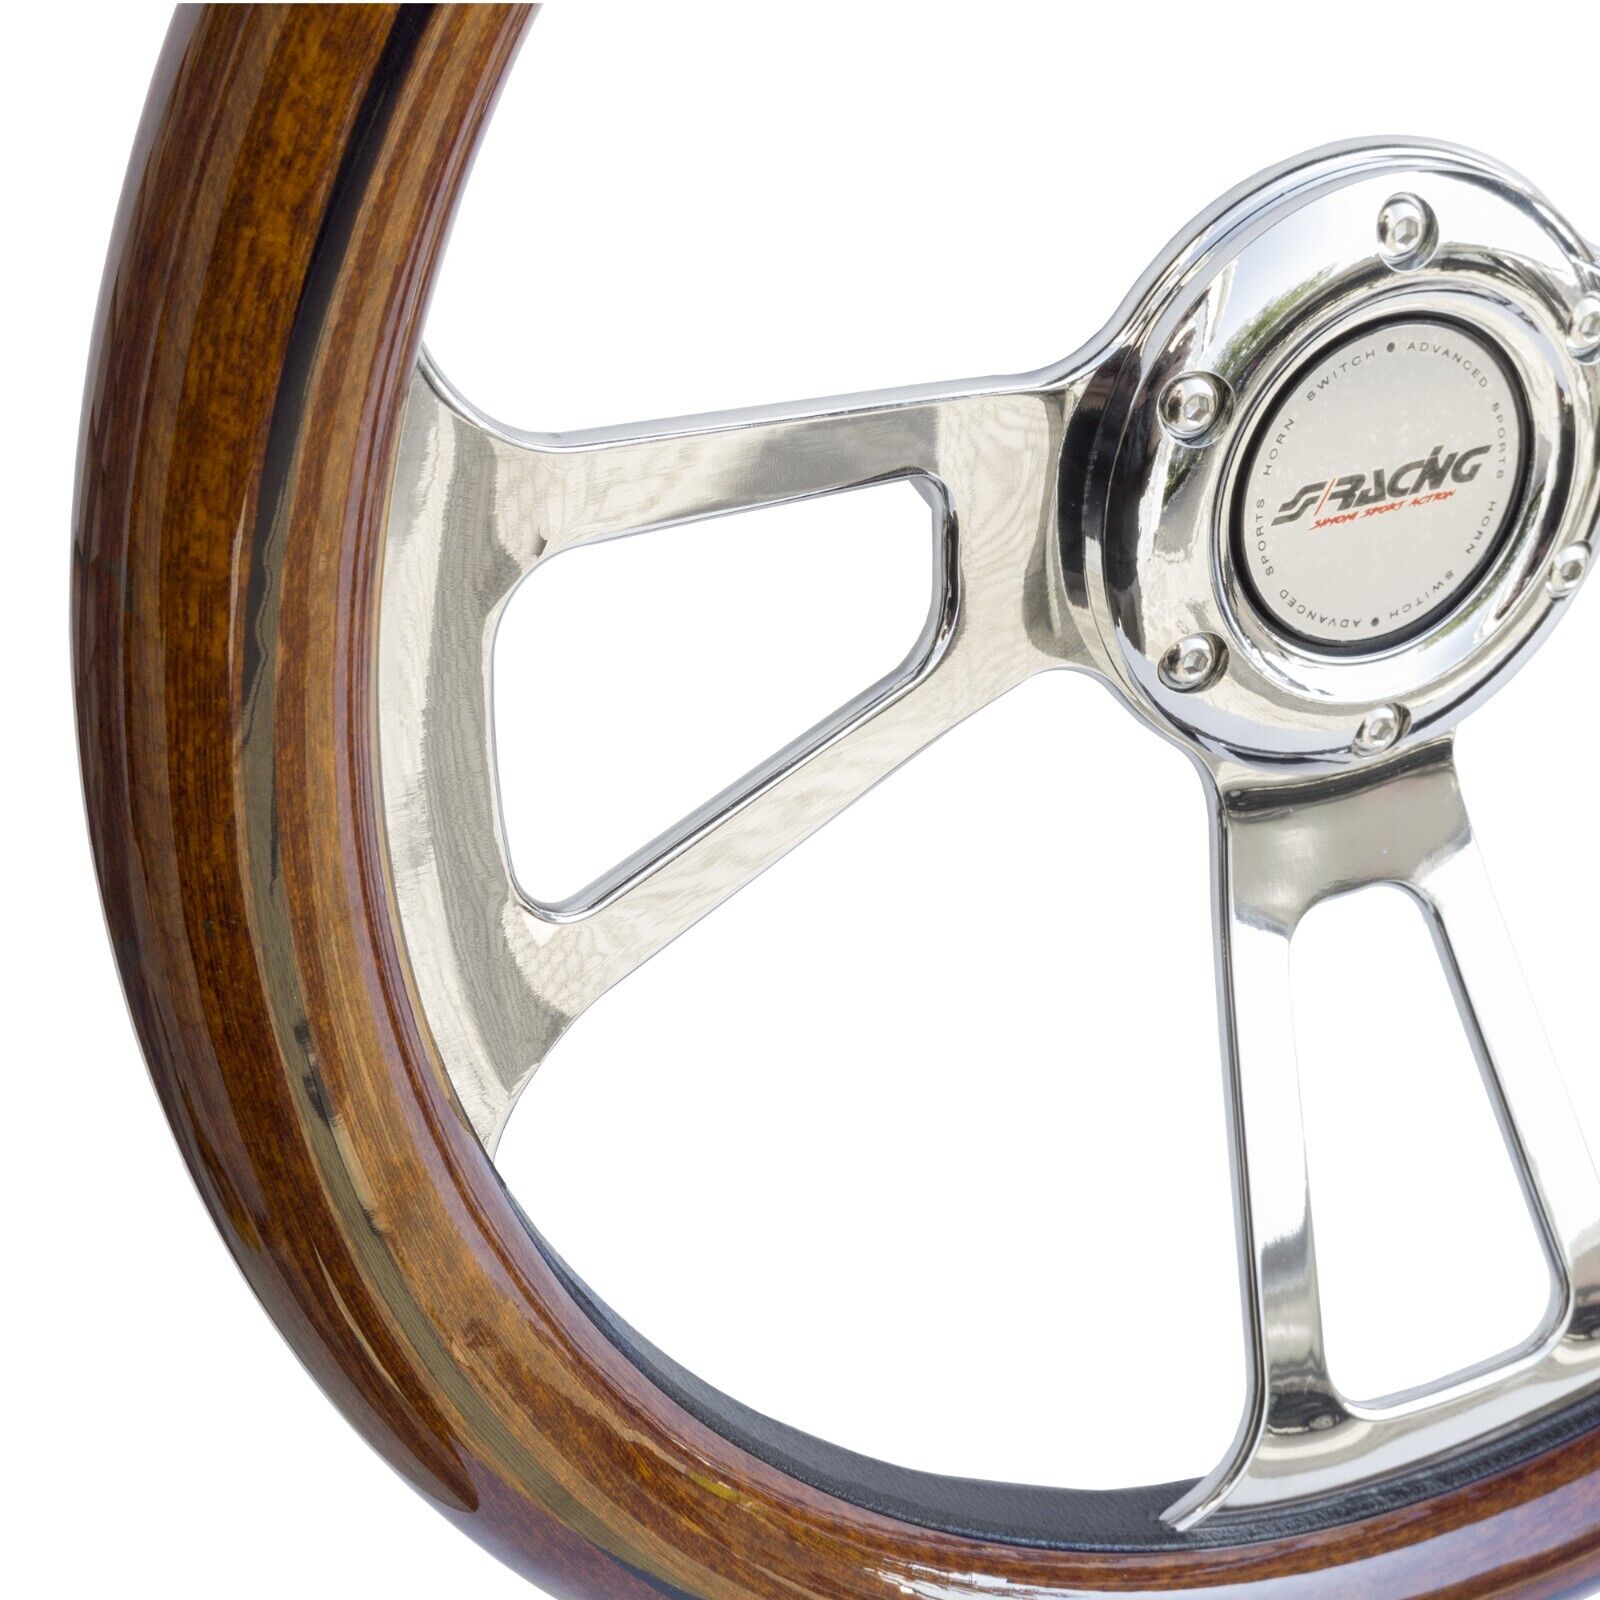 Simoni Racing Universal Steering WHEEL Sella 350mm Wood Look Brown Chrome